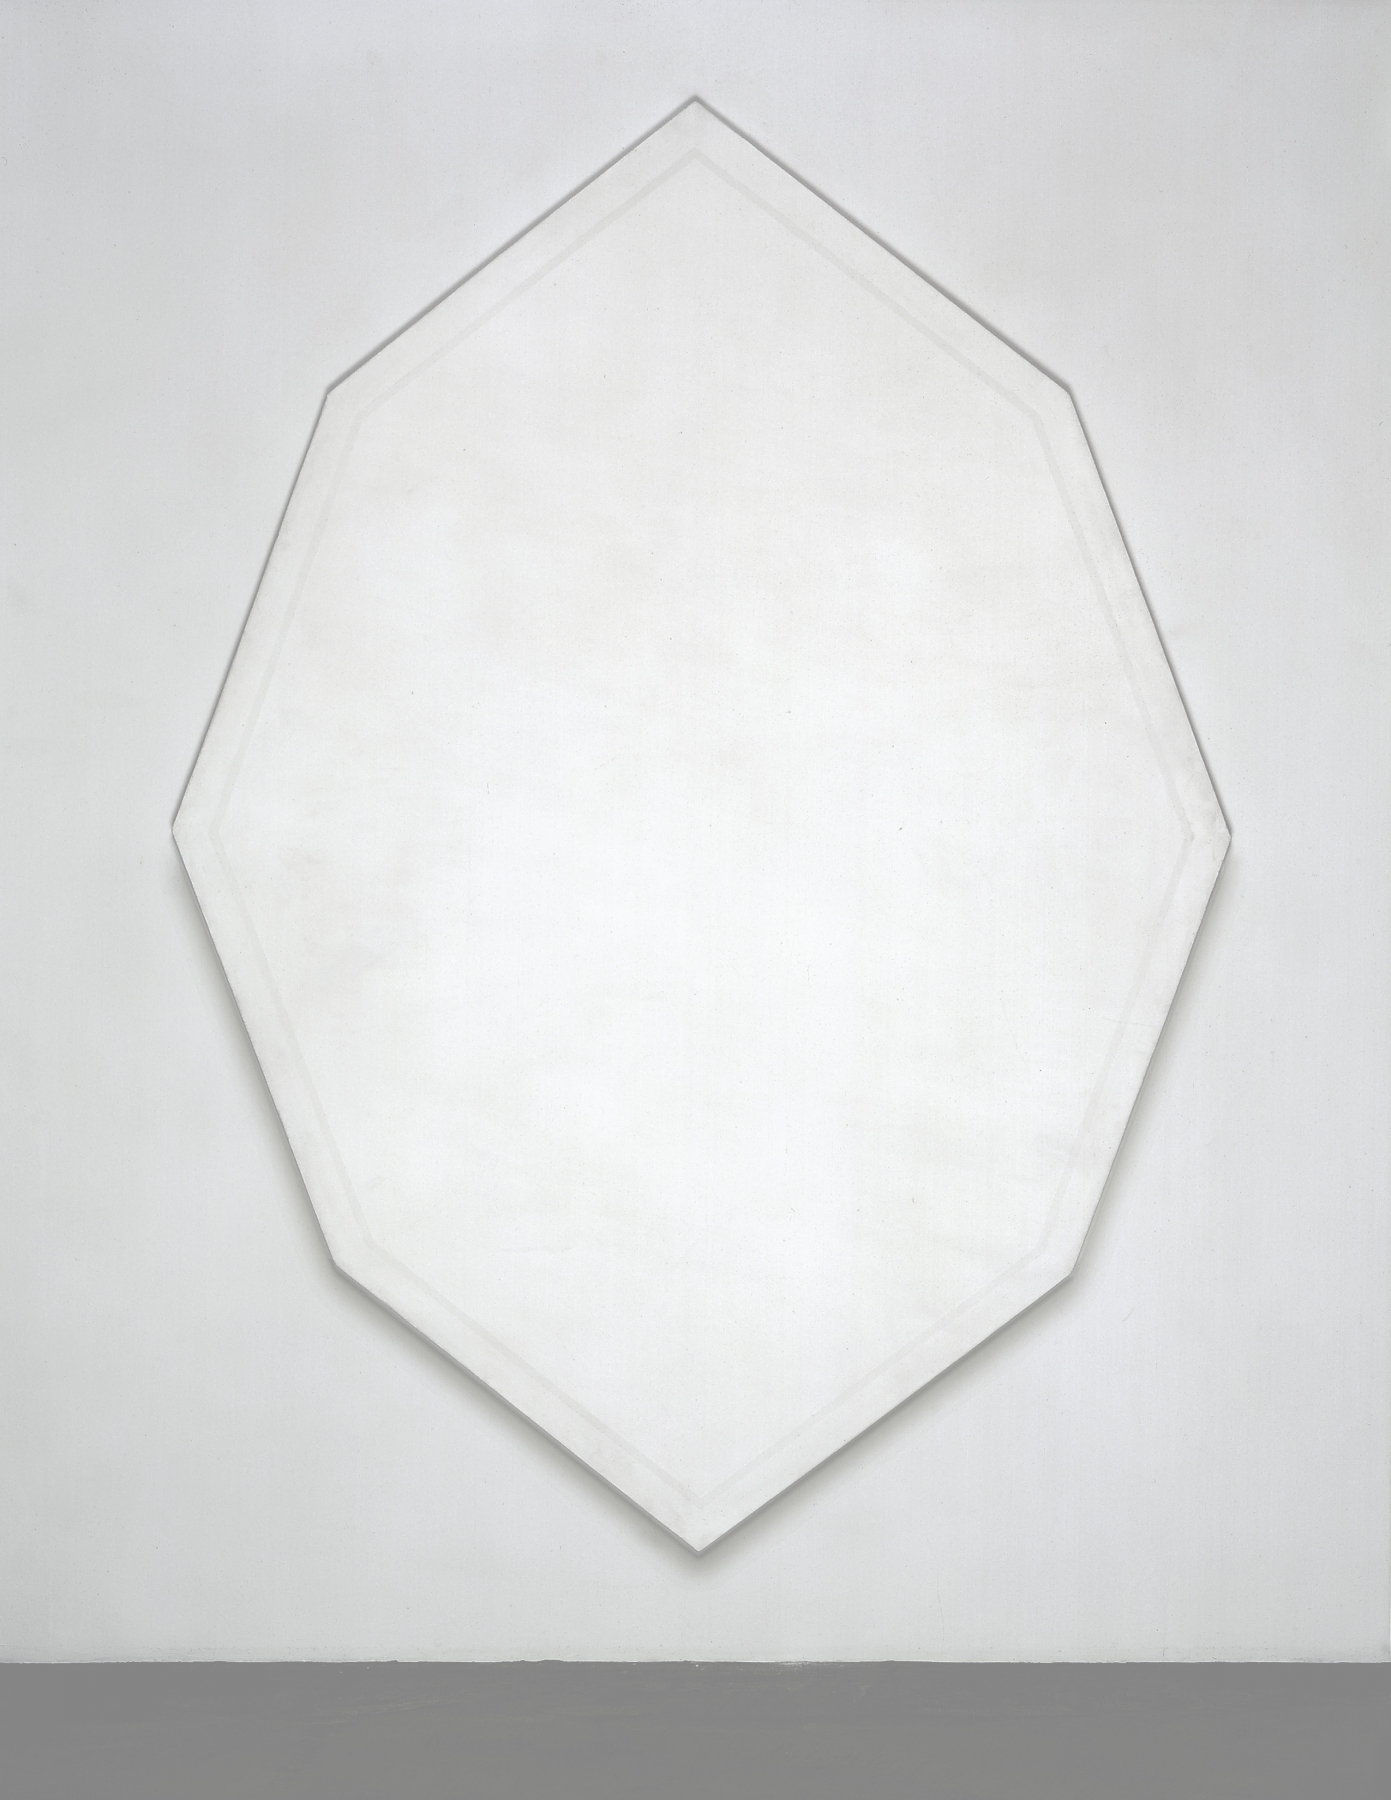 Mary Corse, Octagonal White, 1964. Acrylic on canvas.